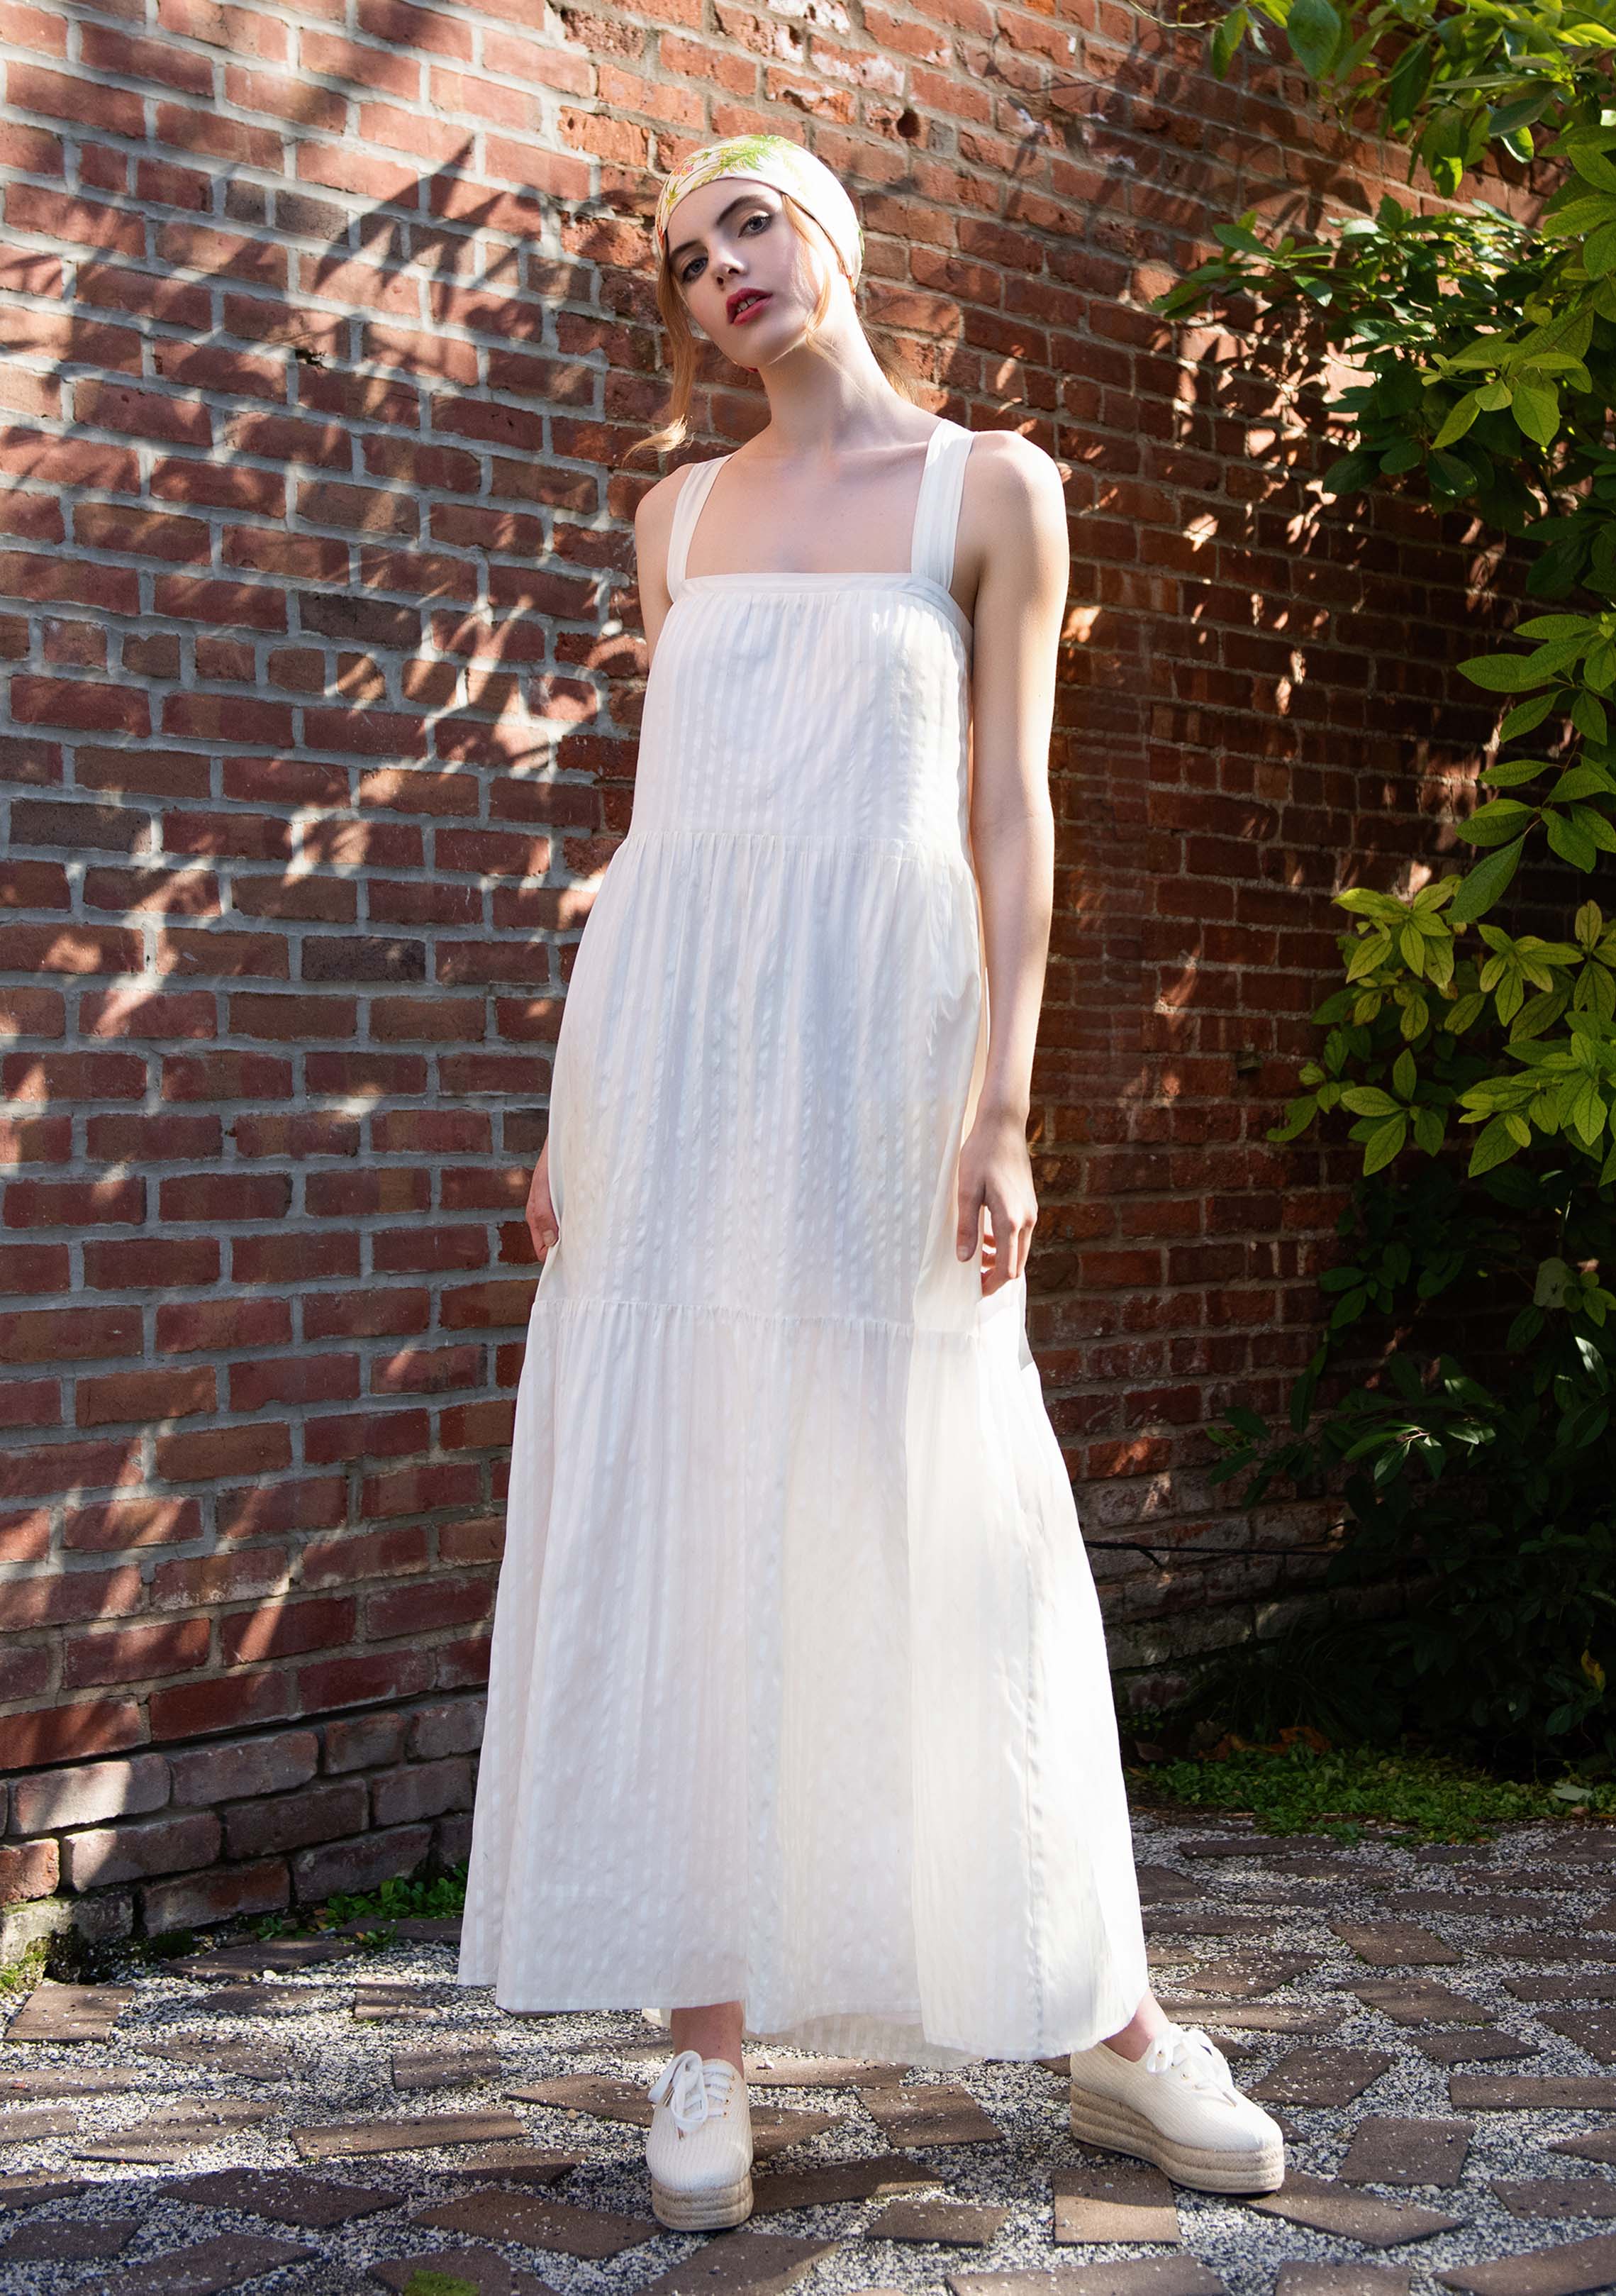 front profile view of woman wearing white sleeveless cotton silk blend dress